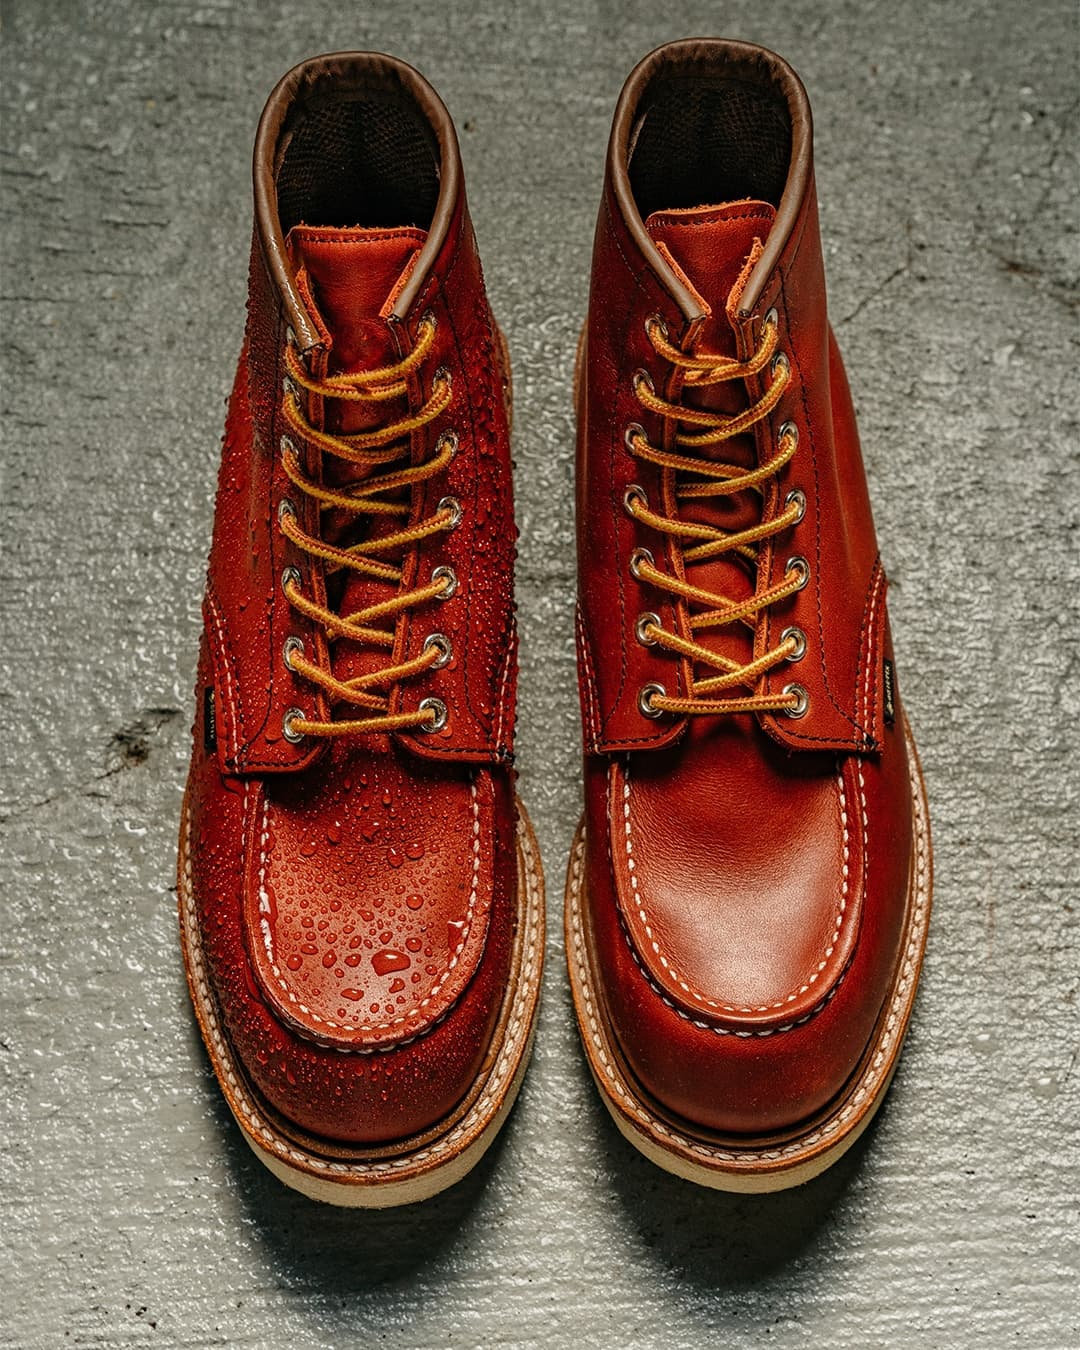 RED WING 推出的秋冬全新鞋型有点帅了，值友们有种草的吗？